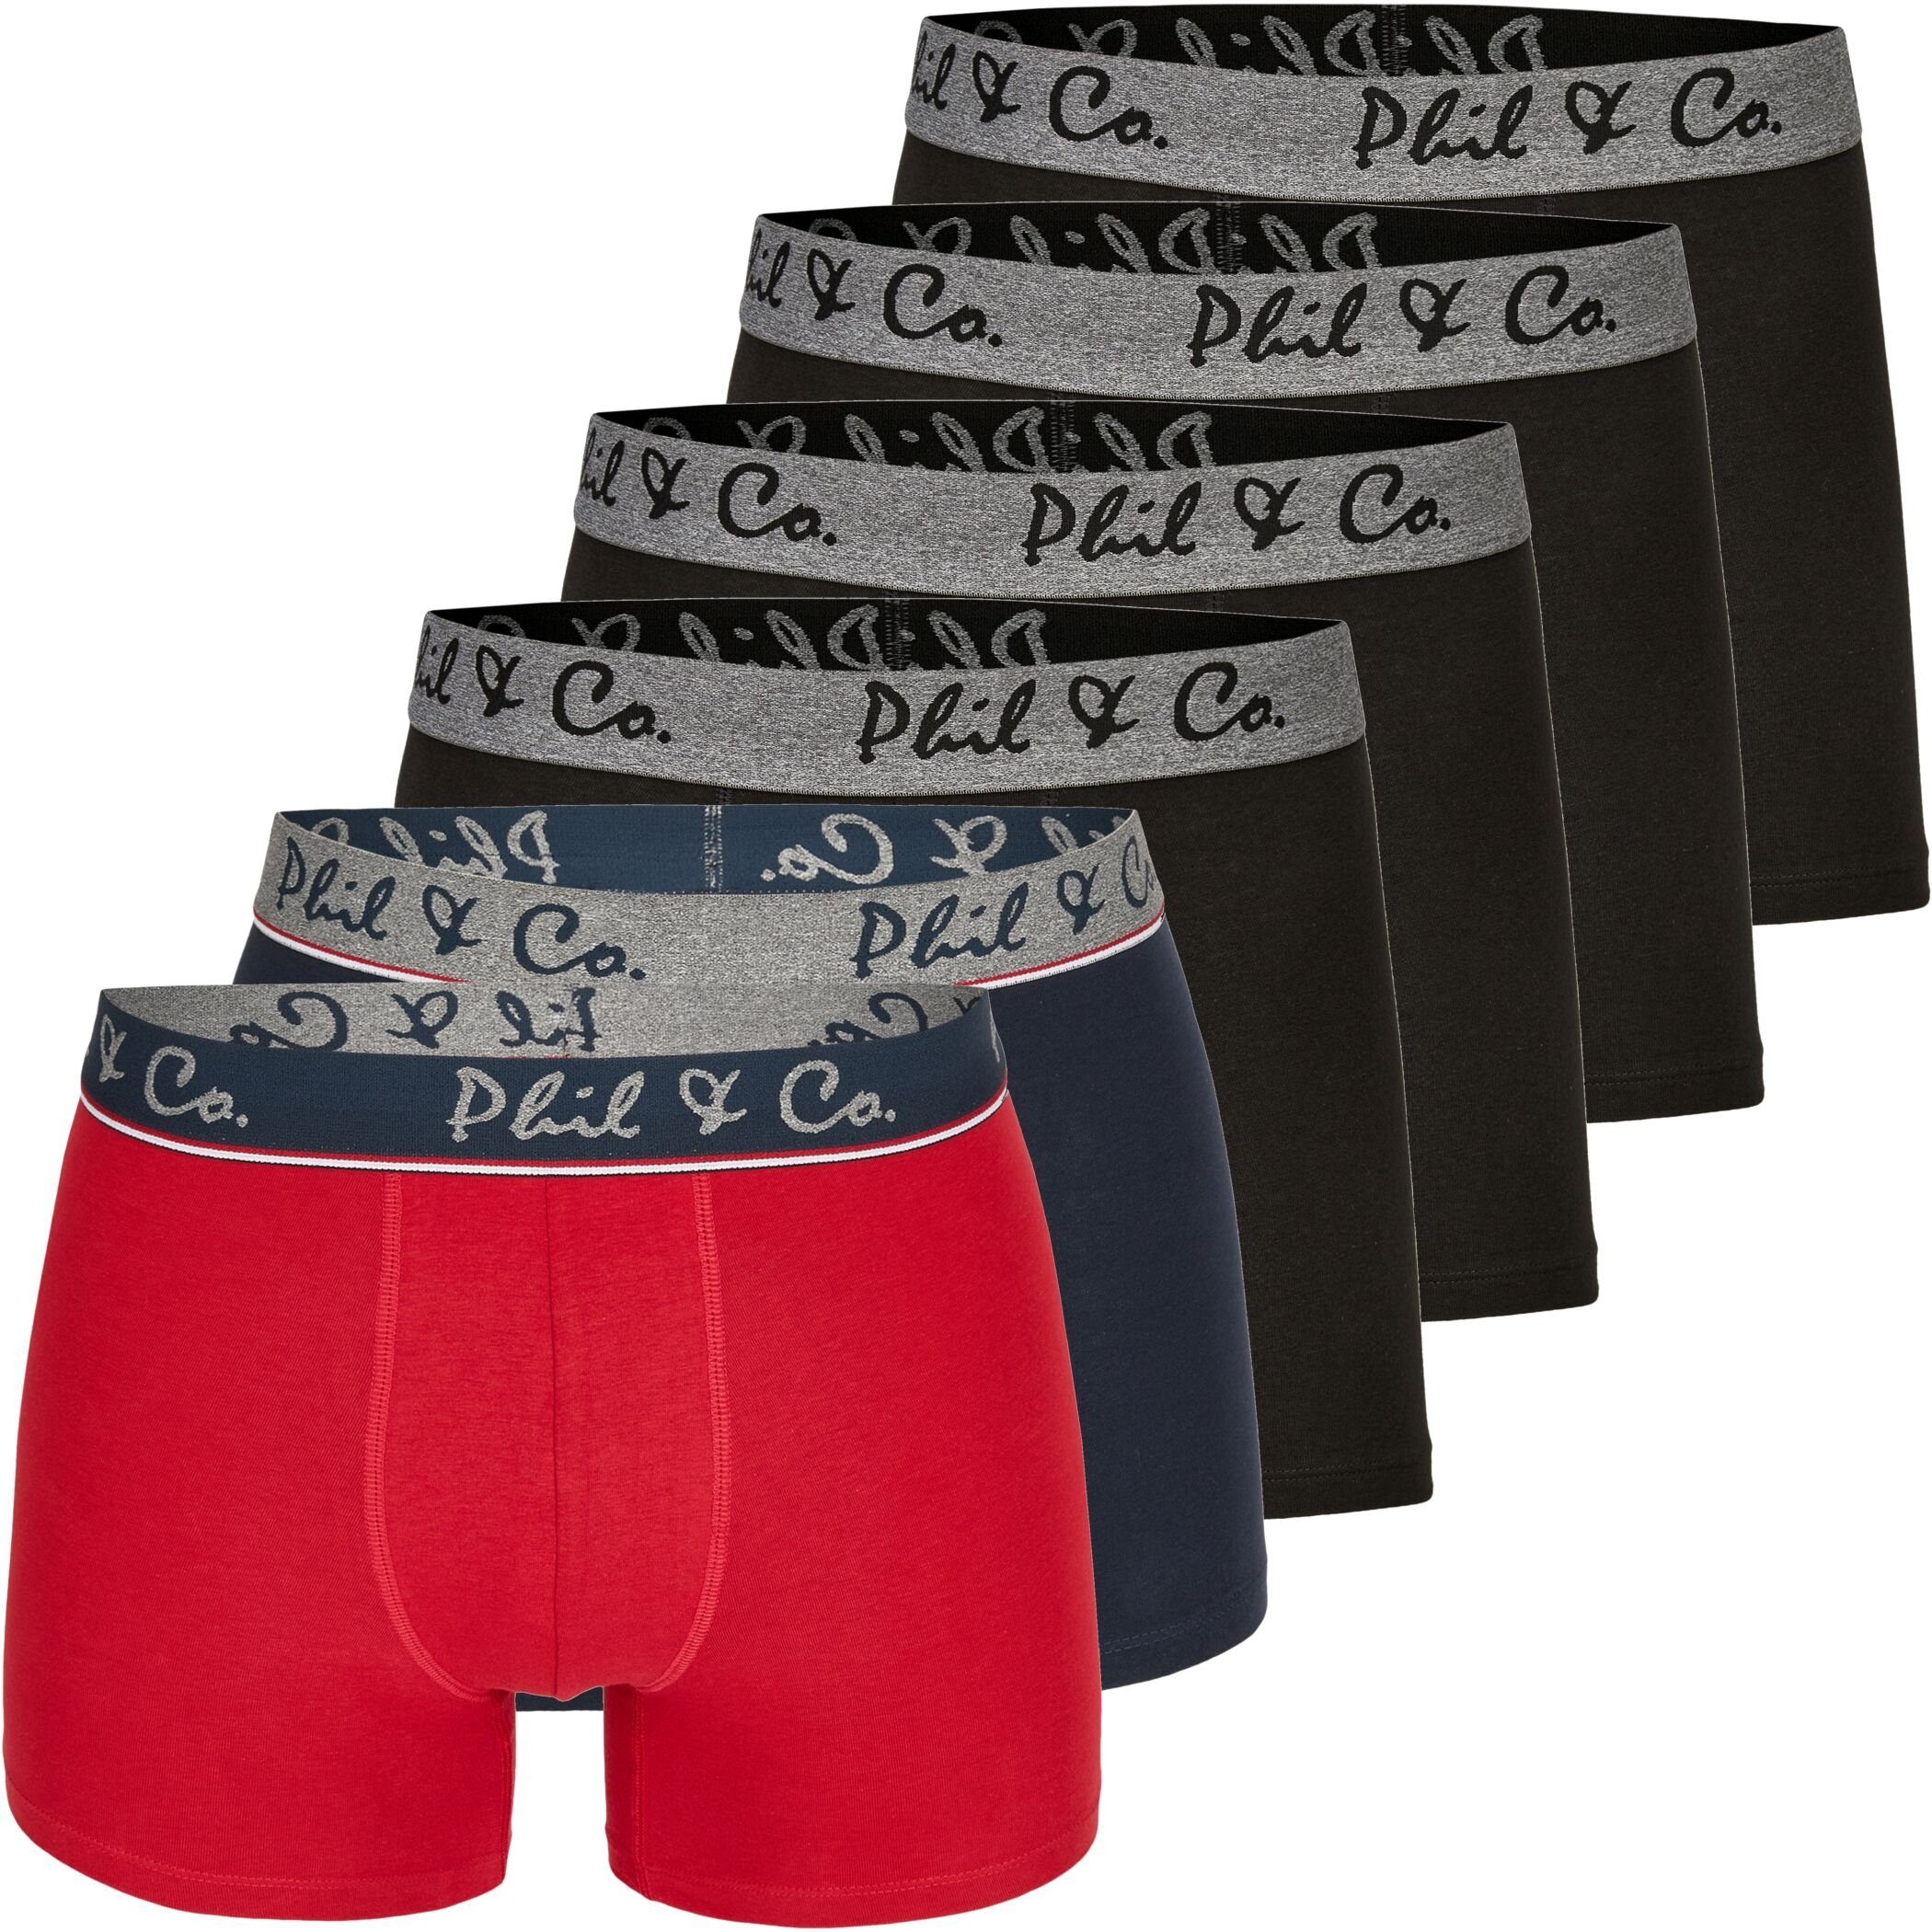 DESIGN Boxershorts Pant Trunk 16 Boxershorts 6er Phil Co Short Pack & Co. Berlin (1-St) Jersey & FARBWAHL Phil